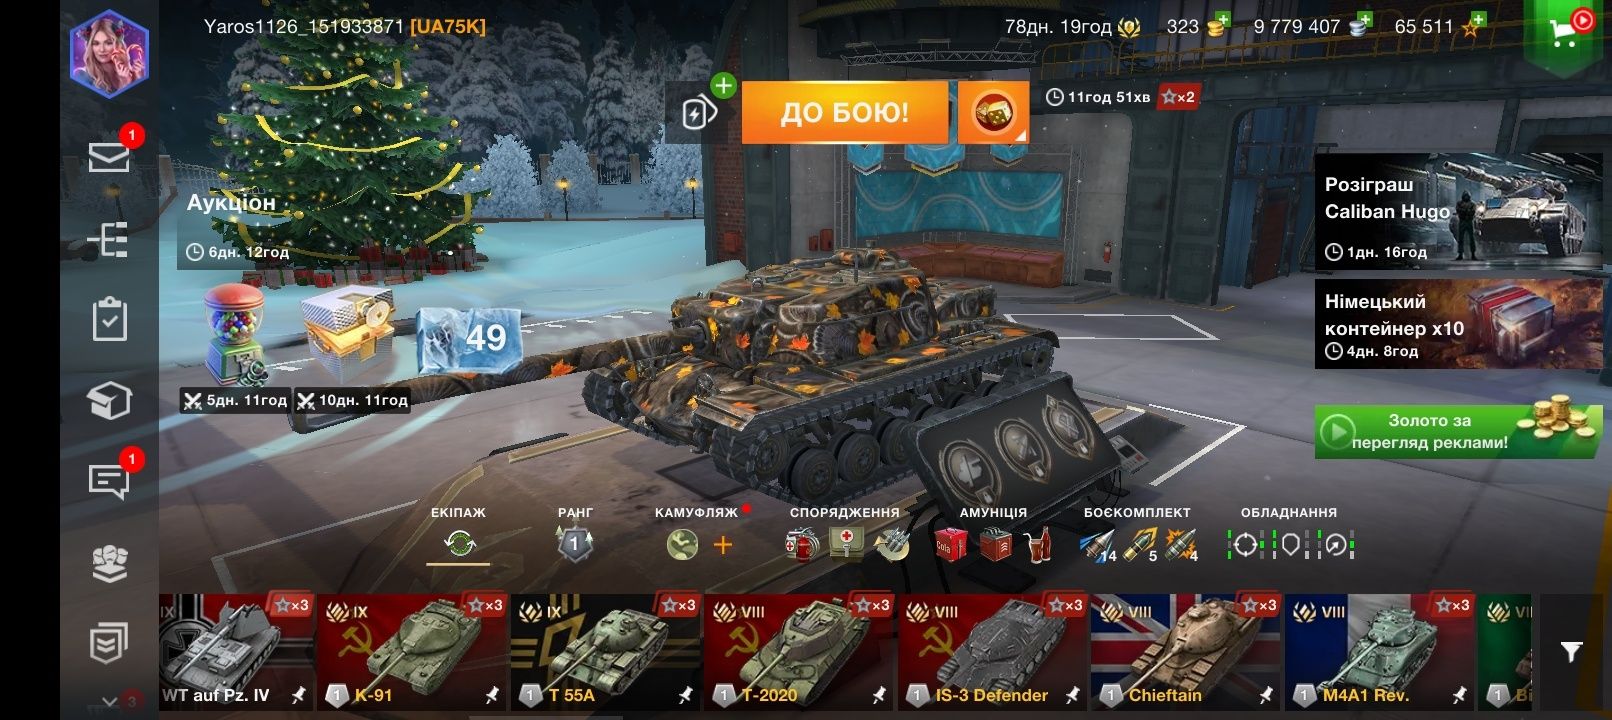 Продам обміняю акаут World of Tanks Blitz.